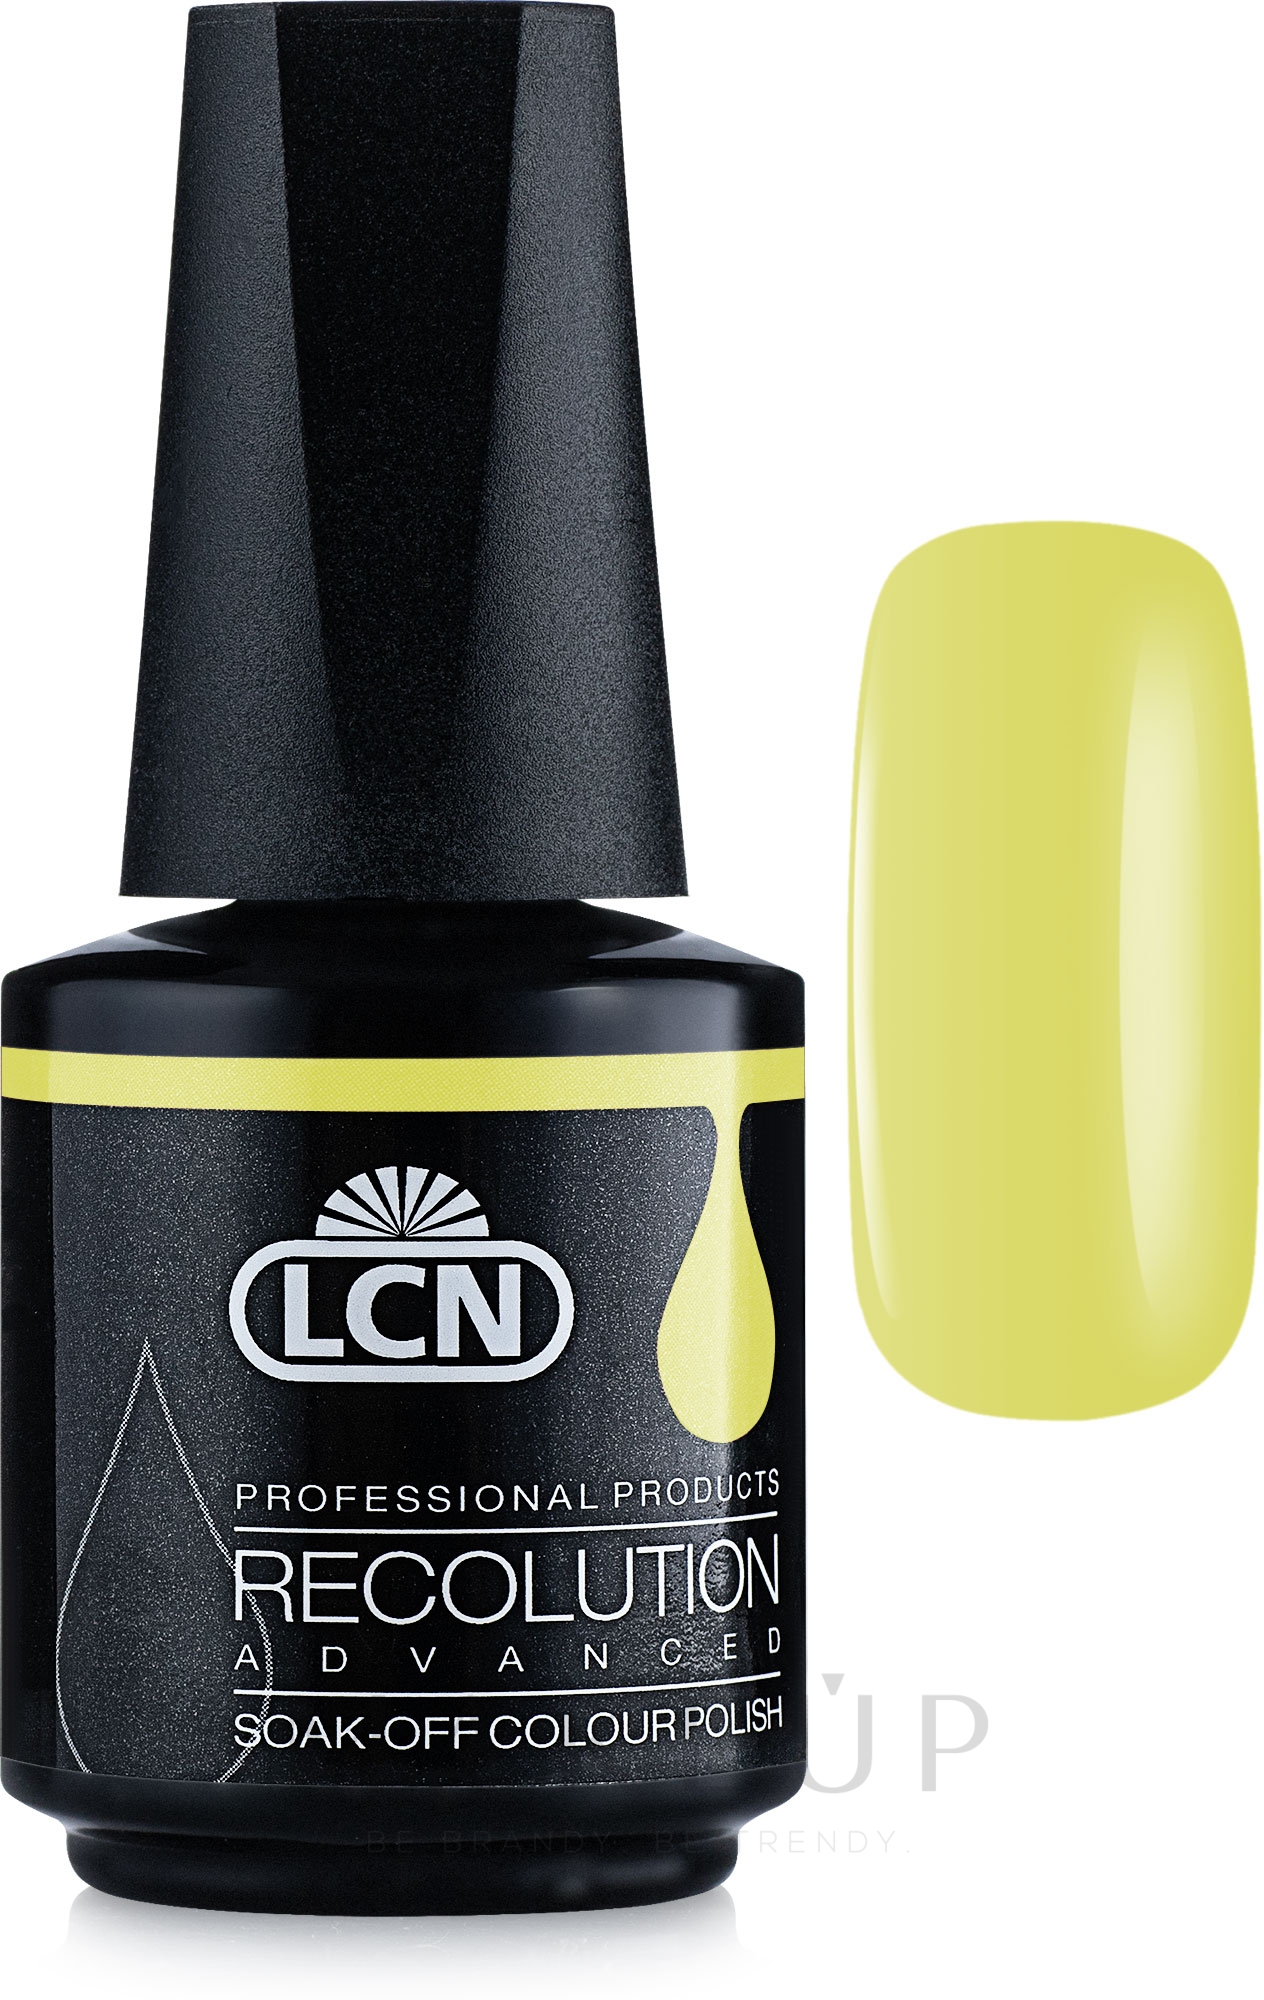 Gel-Nagellack - LCN Recolution Advanced Soak-Off Color Polish — Bild Banana Beach